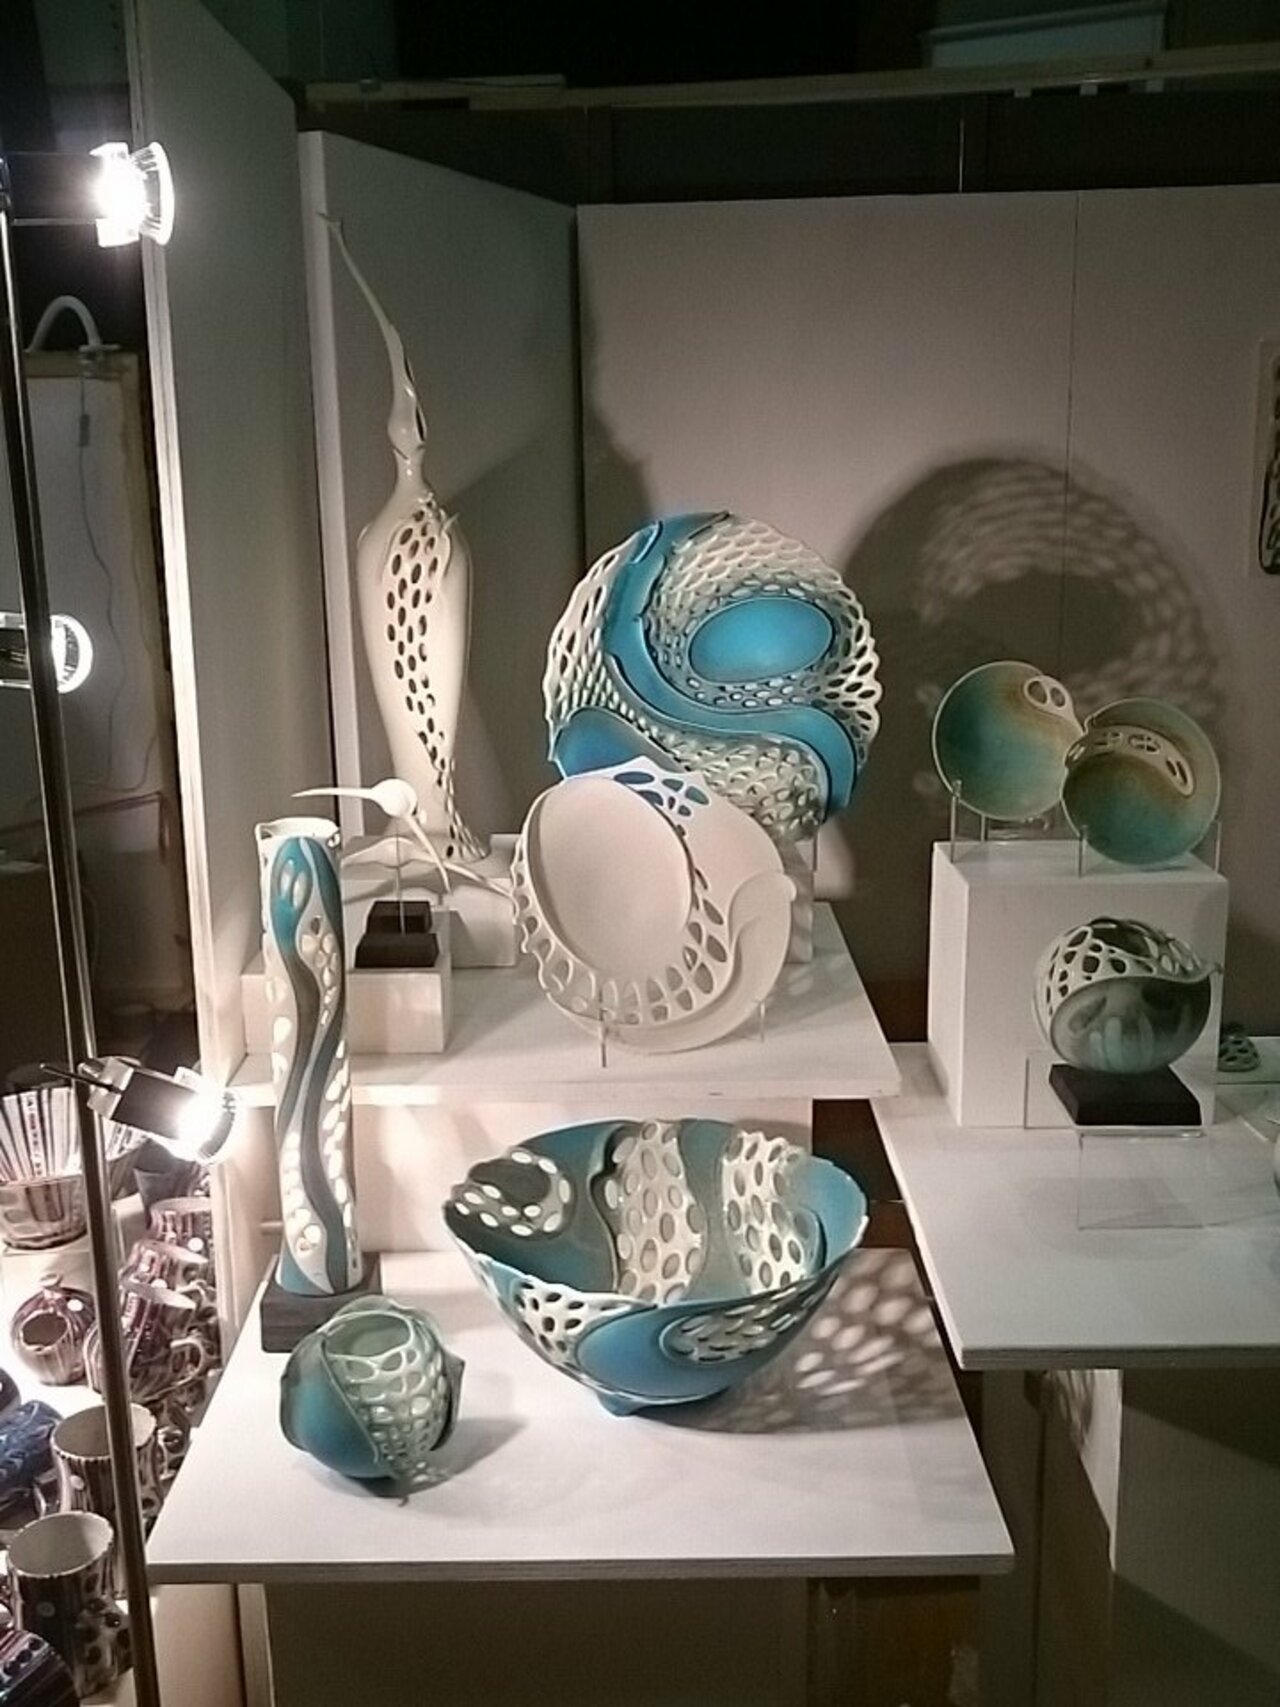 RT @WakefieldPots: @ArtinClay1 Farnham this weekend. Opens tomorrow #ceramics #thisisnotavase https://t.co/pLUXEhEWP2